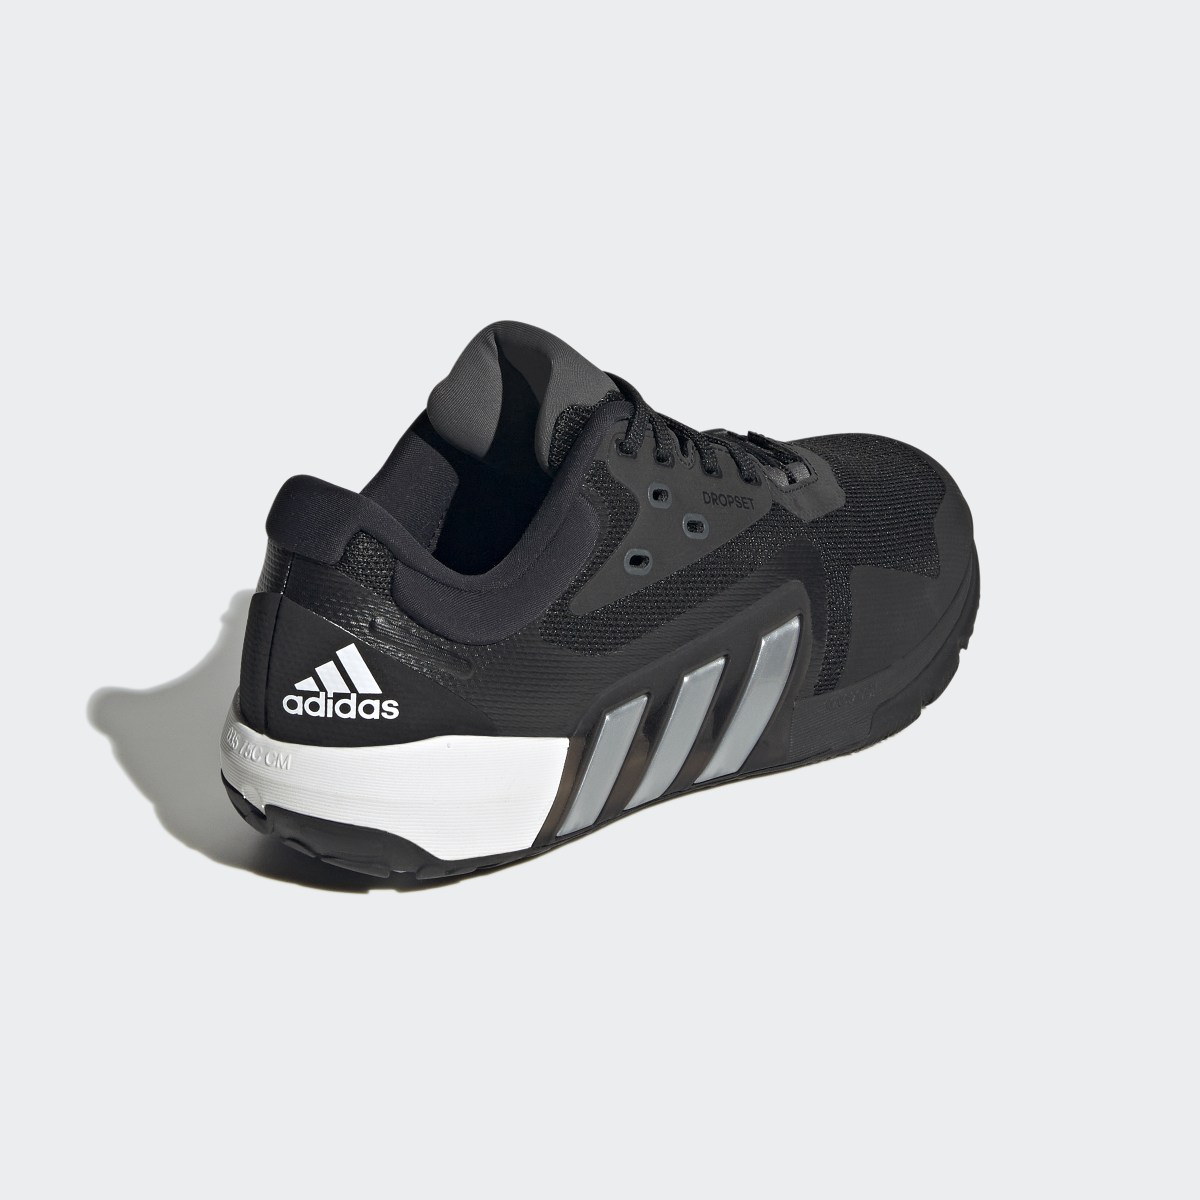 Adidas Dropset Training Shoes. 9